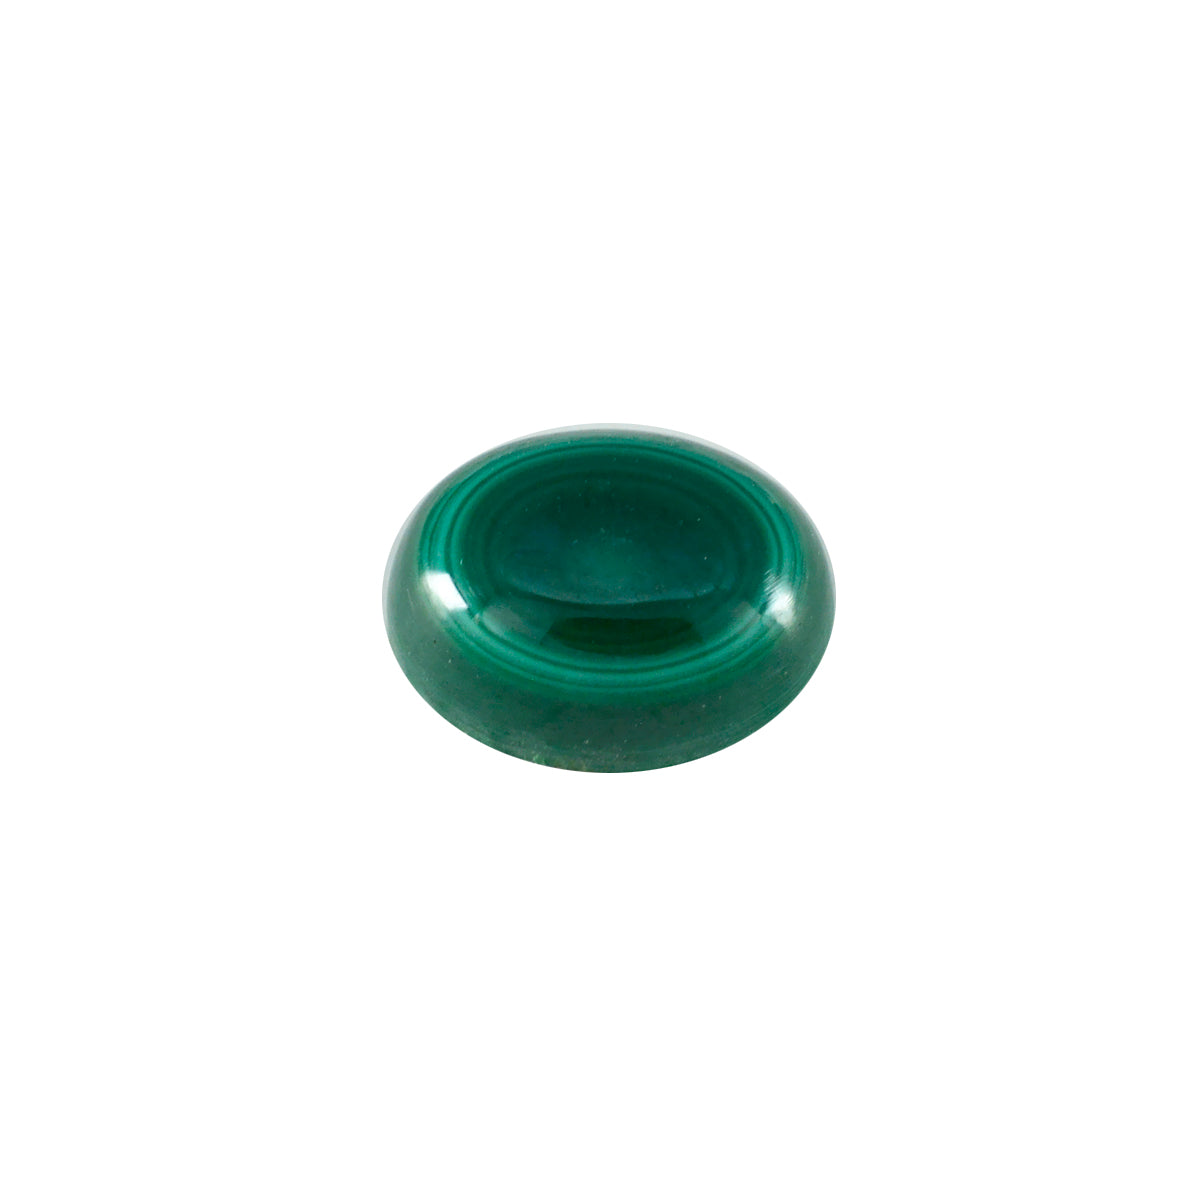 Riyogems 1PC Green Malachite Cabochon 9x11 mm Oval Shape cute Quality Loose Gems